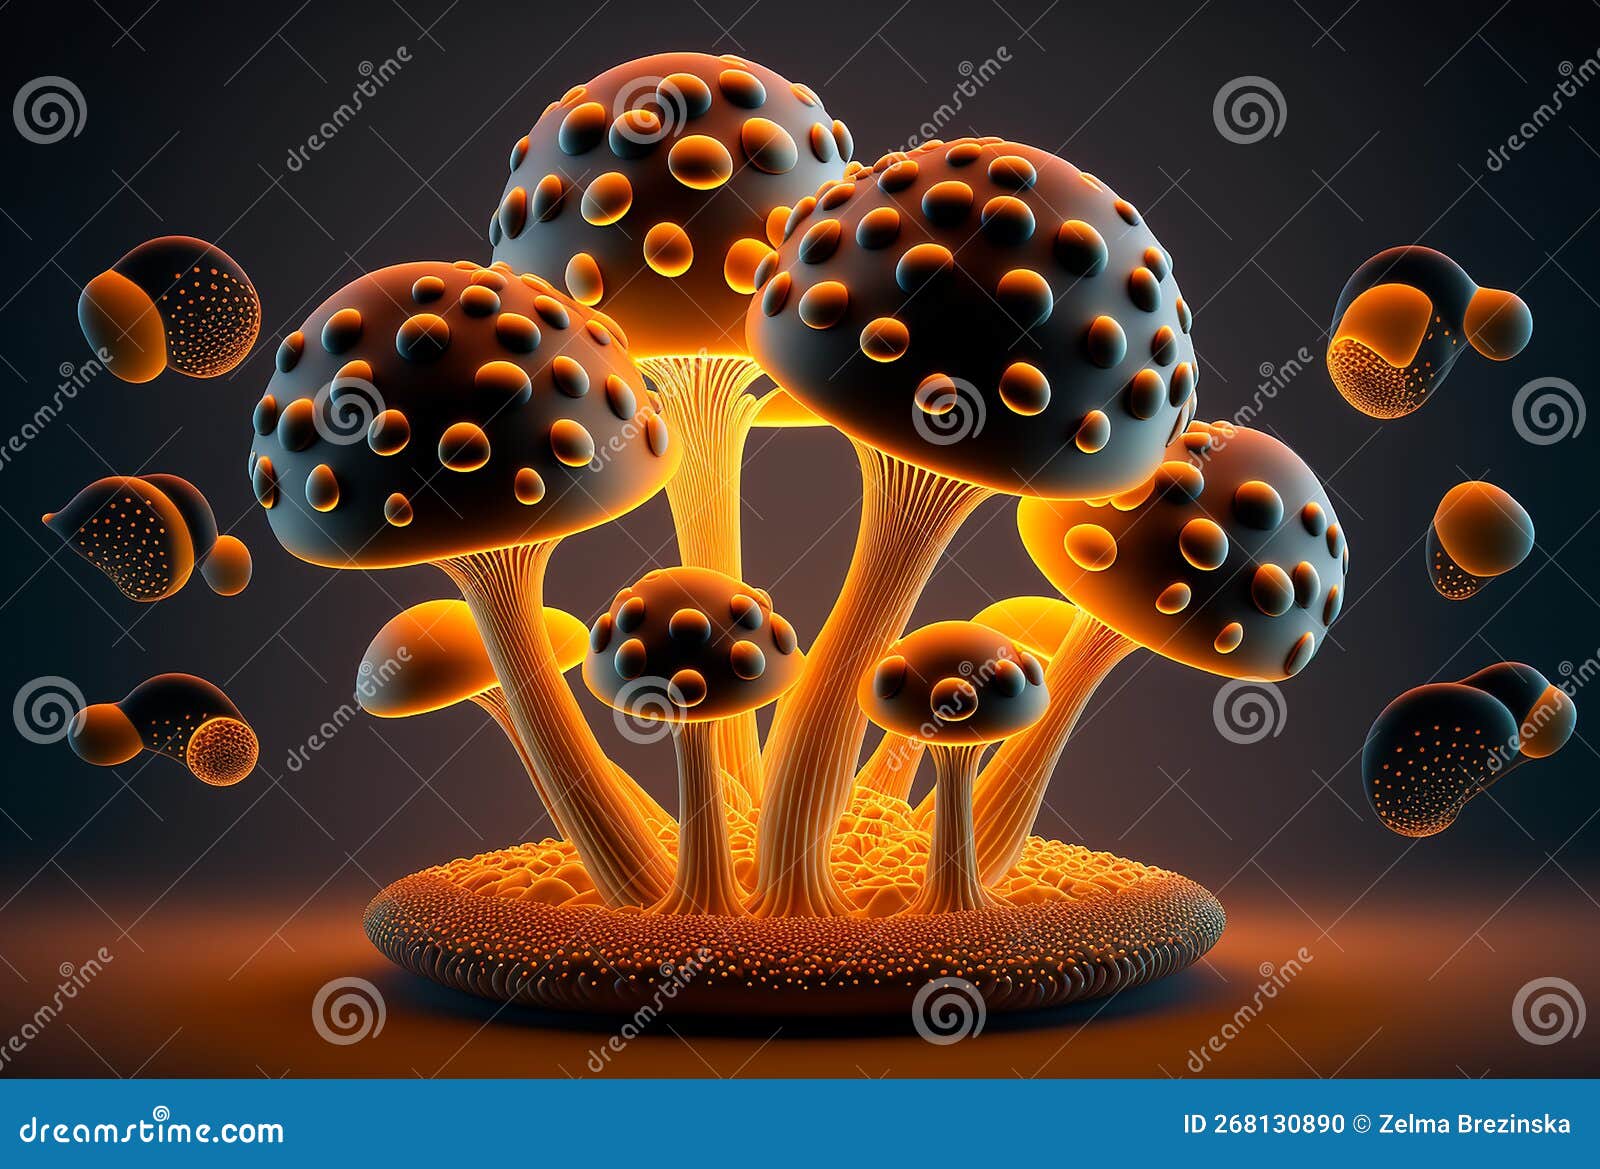 Trippy Mushrooms Pattern Design Vector Download